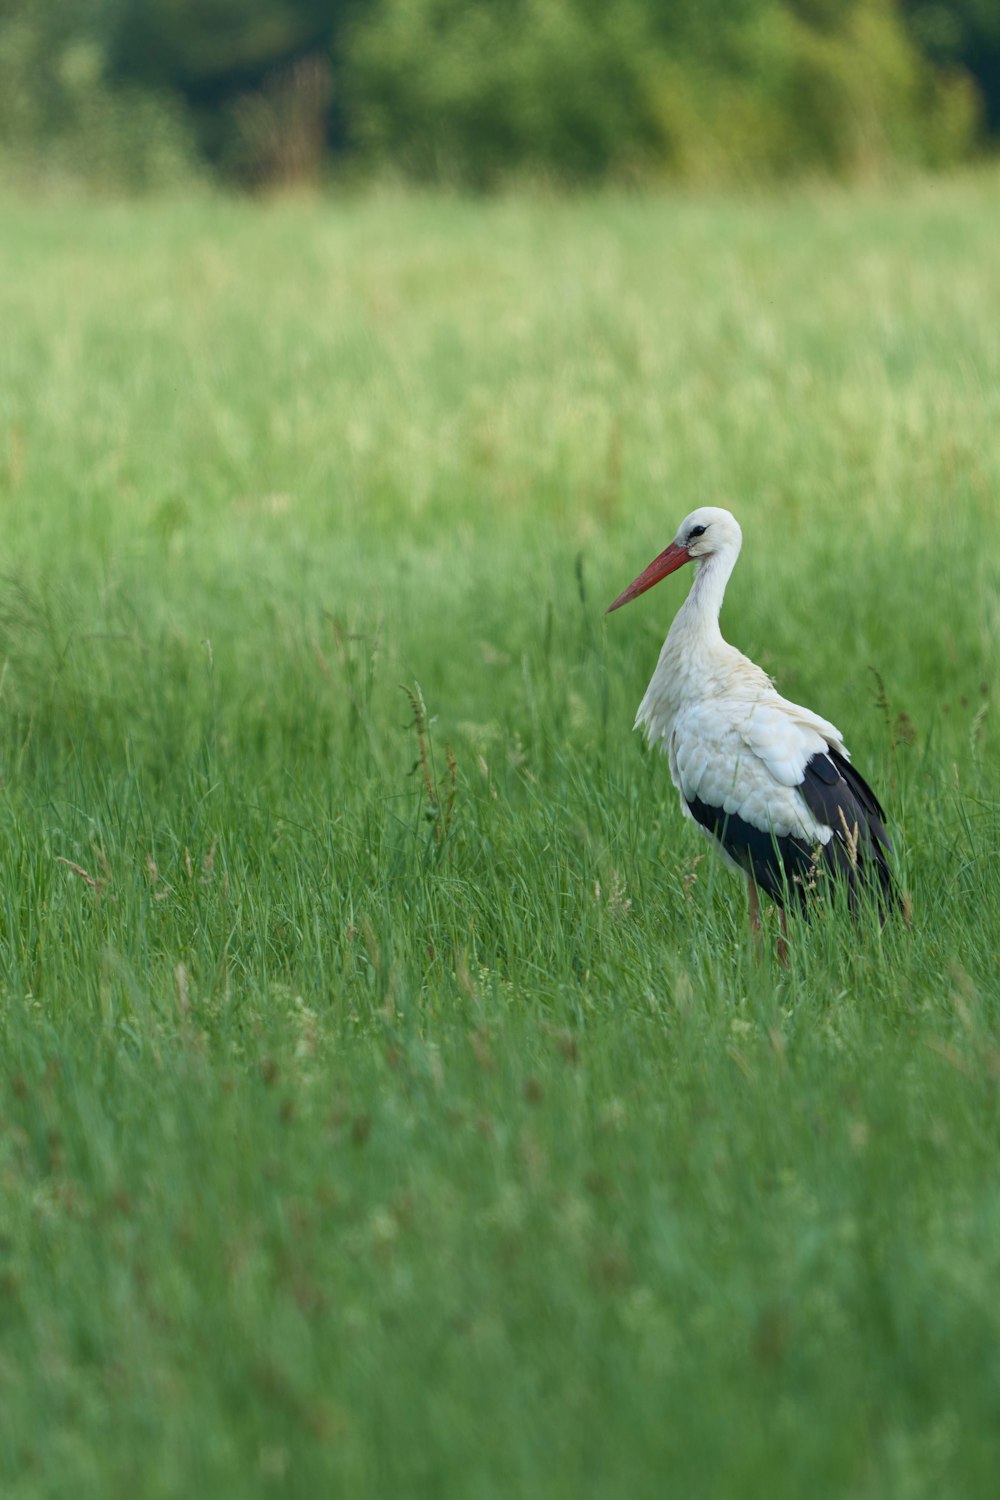 a stork standing in a field of tall grass